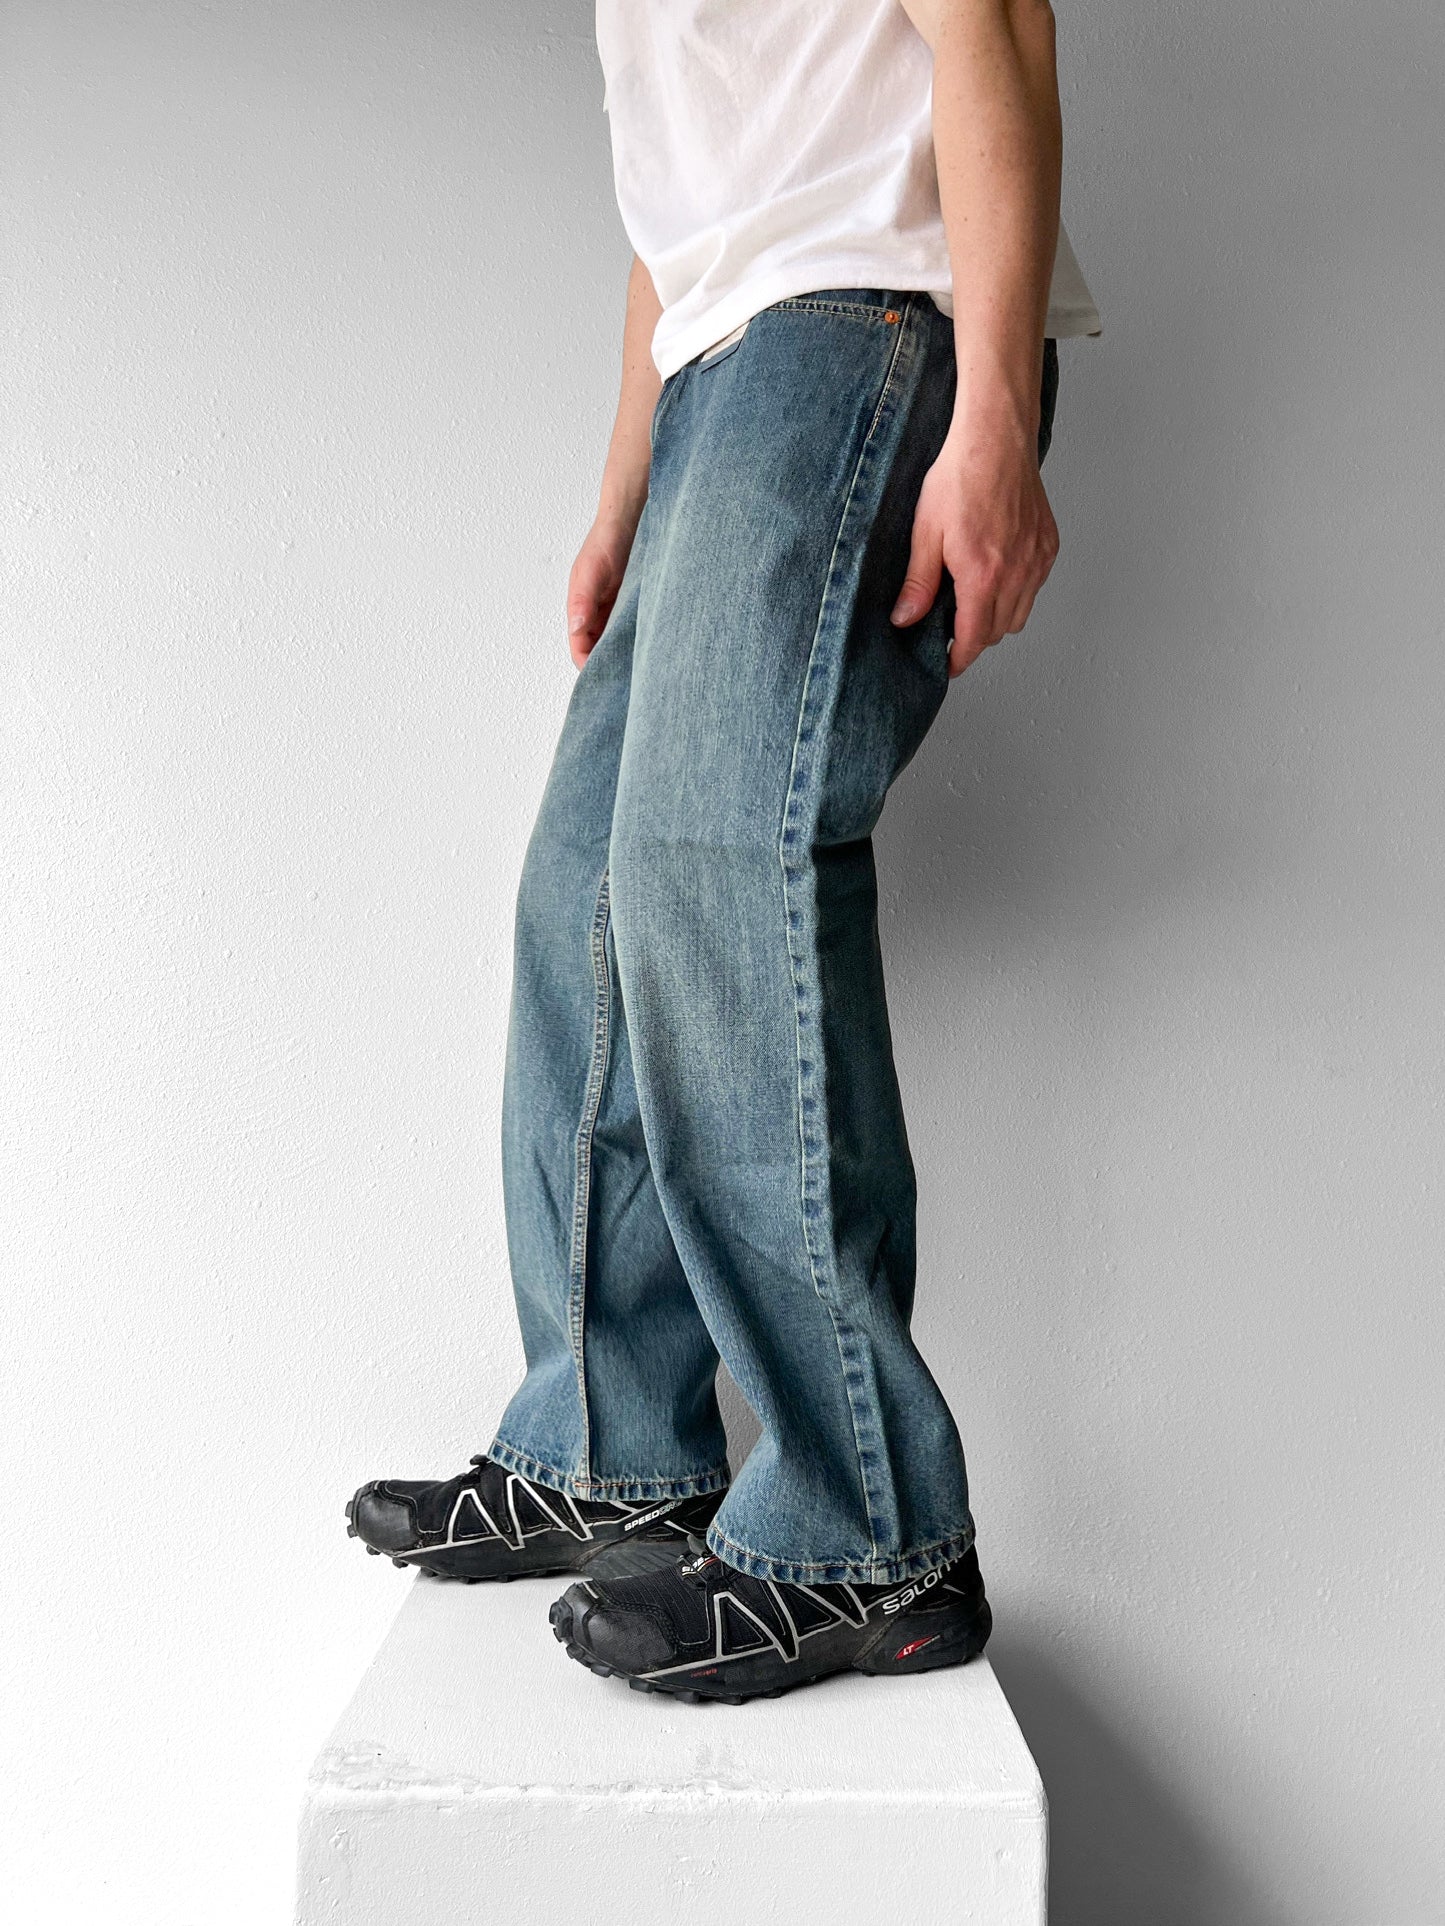 Levi’s 550 Jeans - 34 x 28 NWT